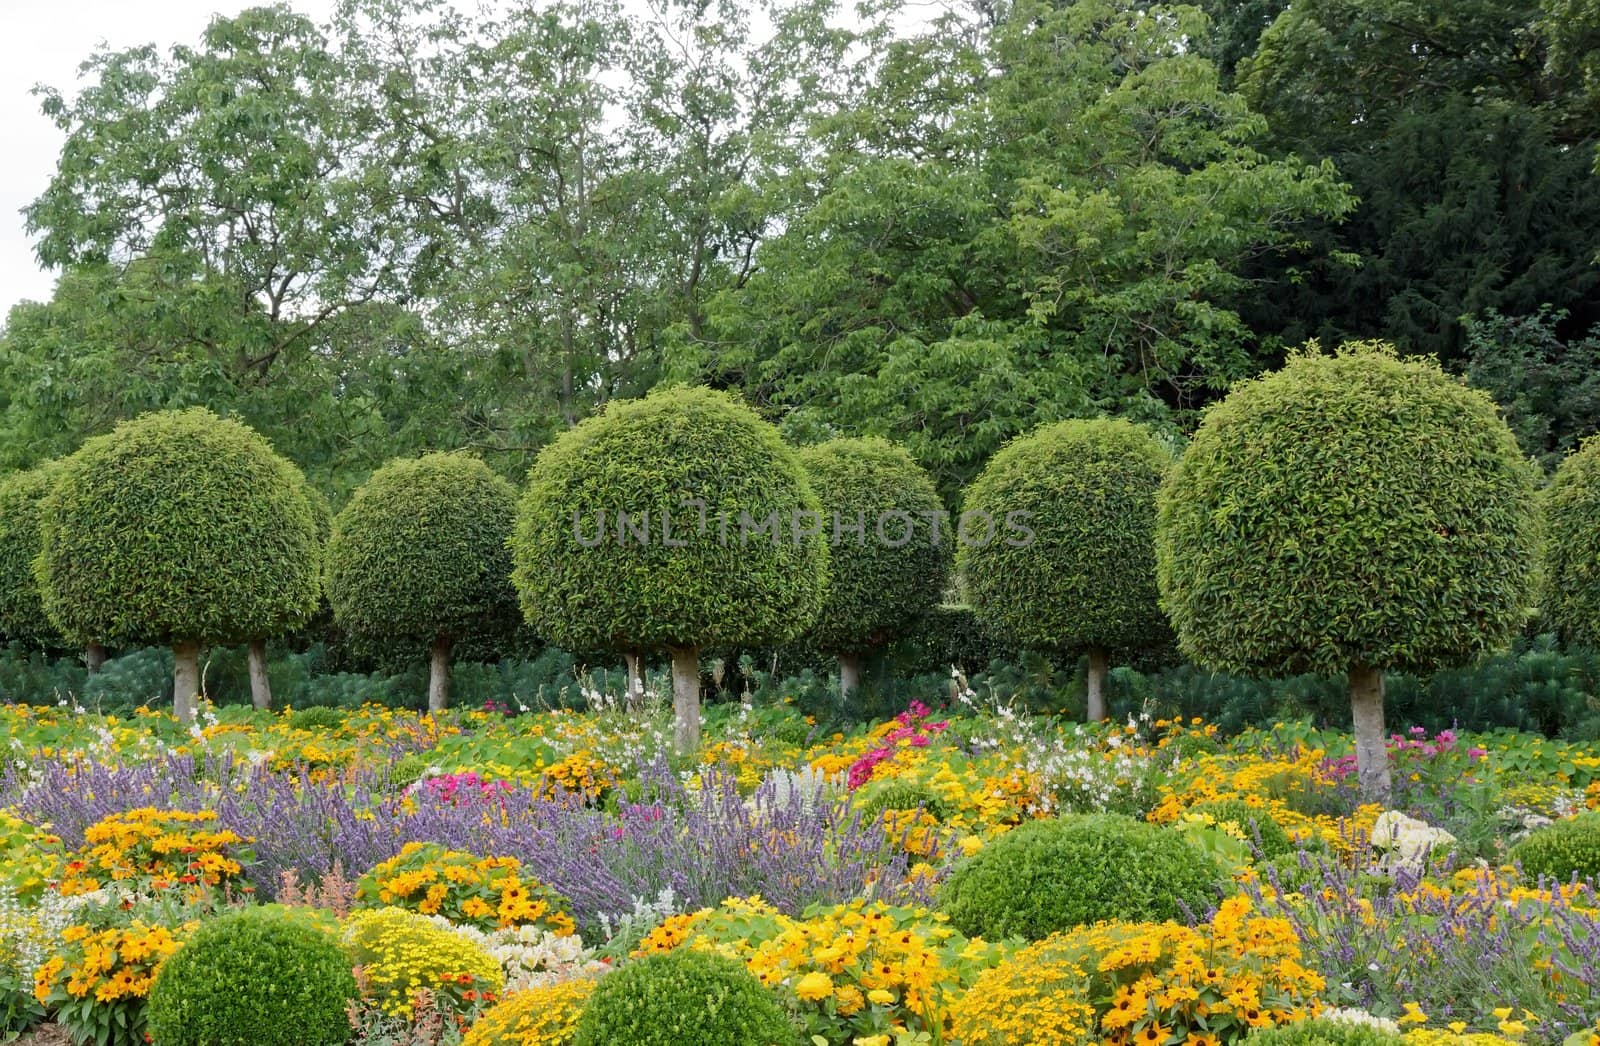 Formal garden, flowers and box tree cut  France by neko92vl